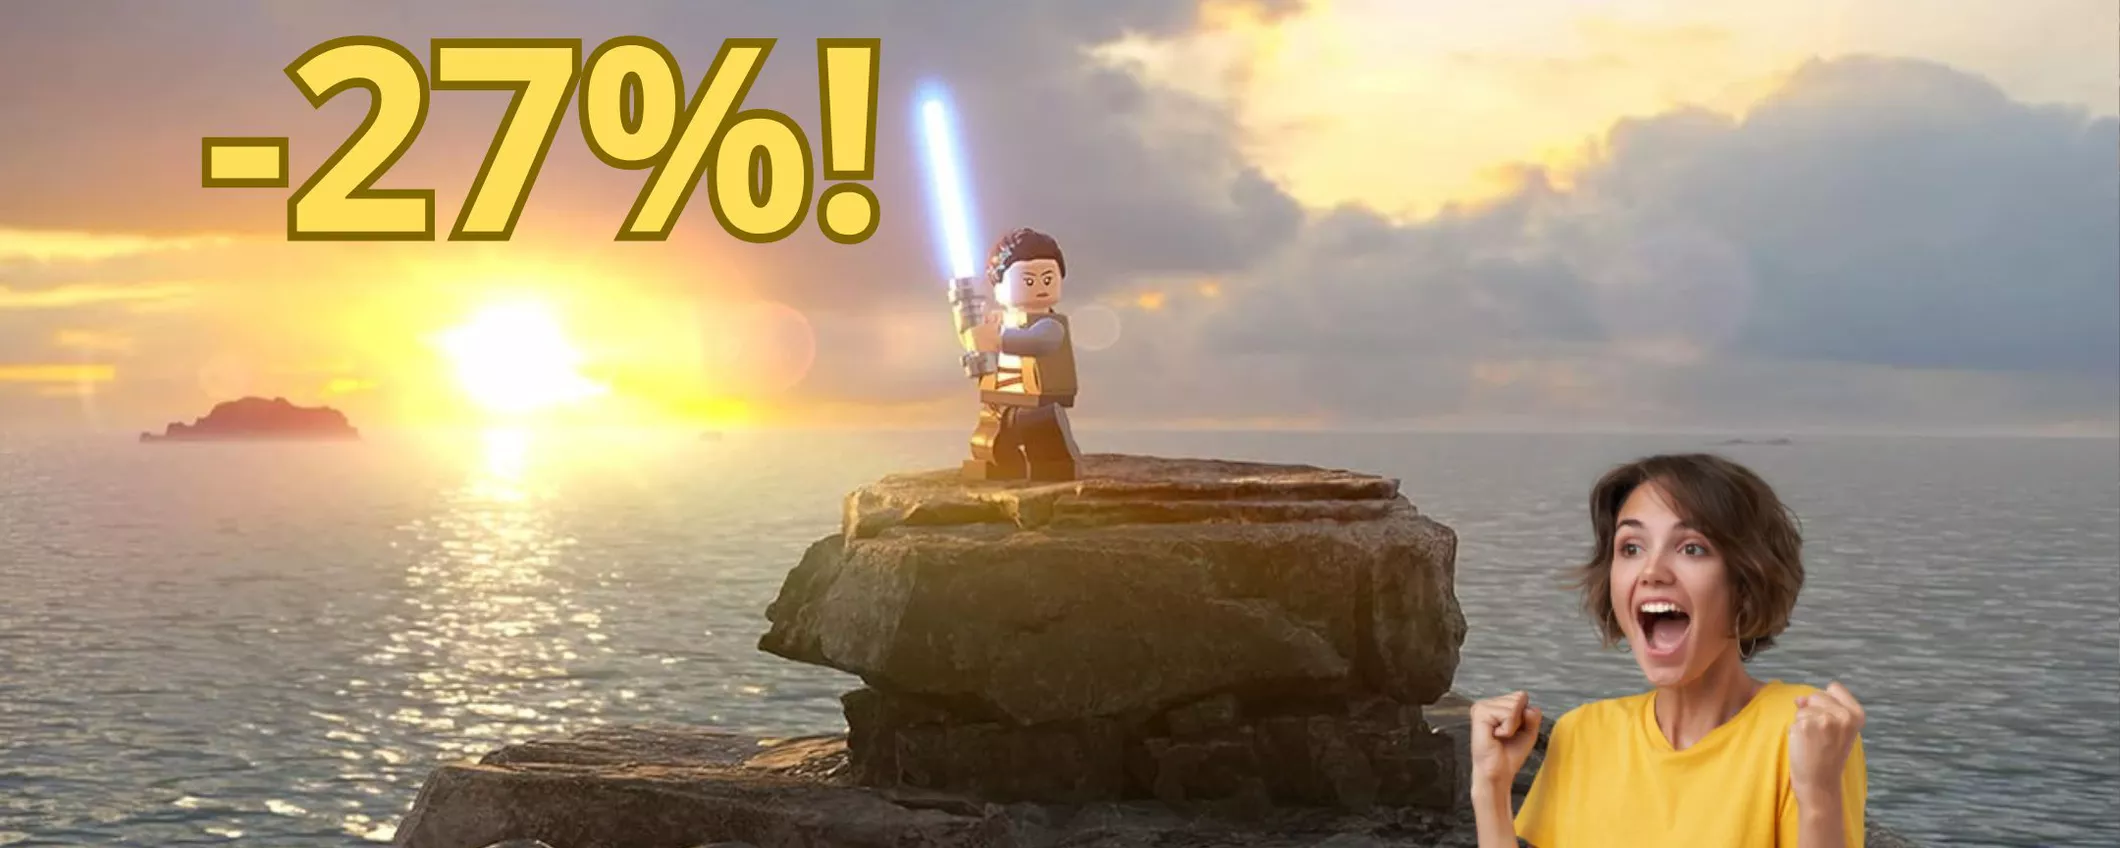 Lego Star Wars: La Saga degli Skywalker, con soli 29 euro giocherai a ben 9 film della saga!